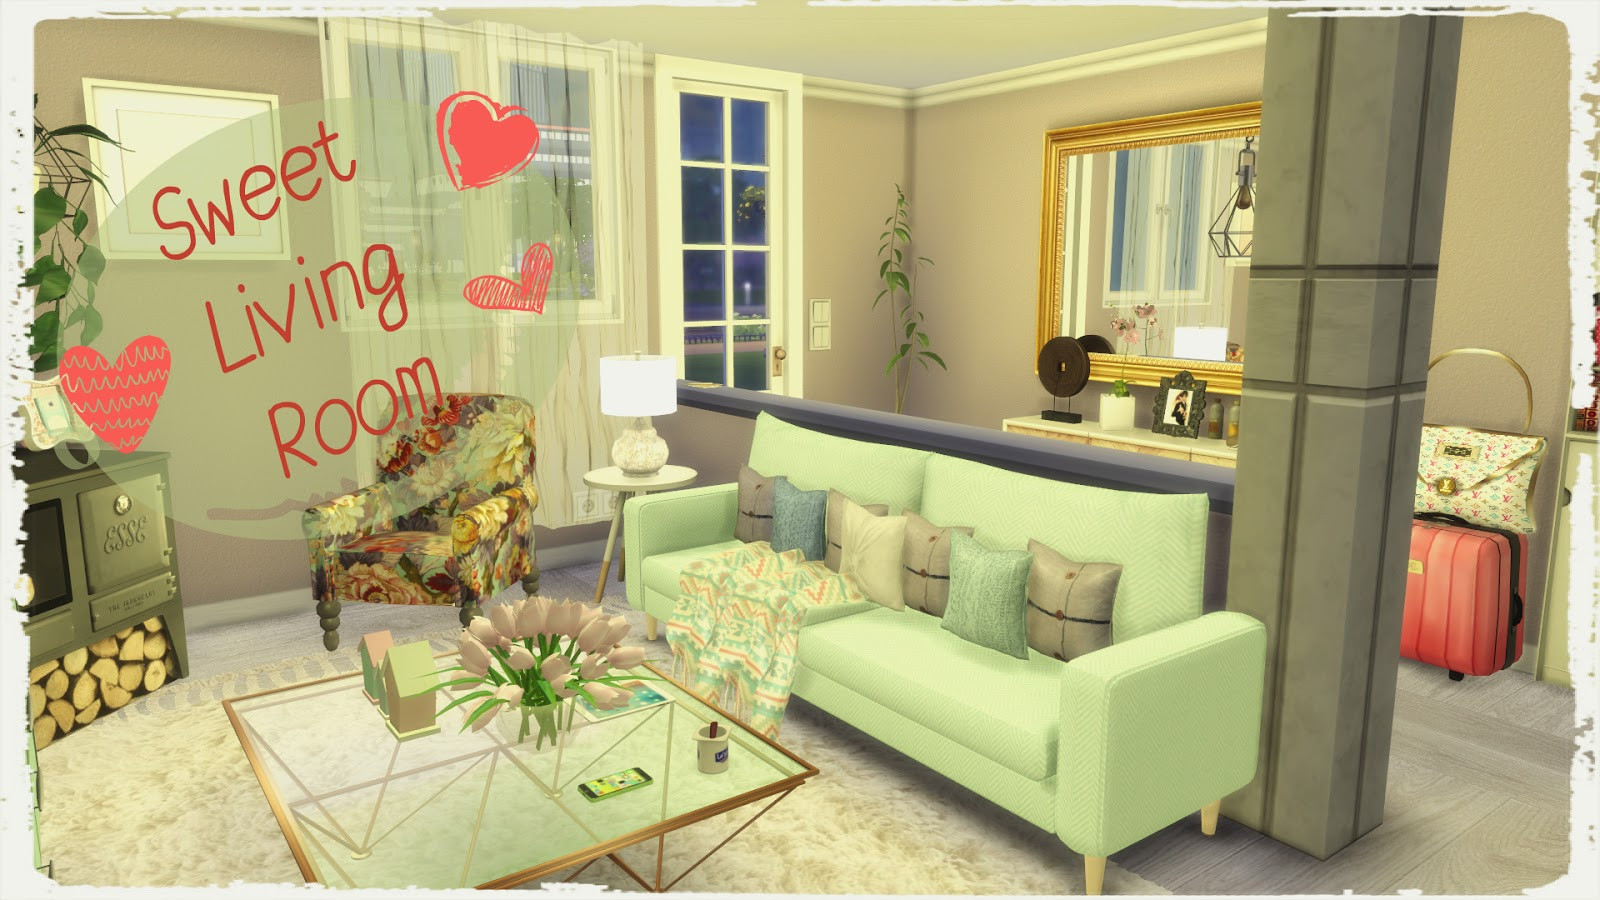 Sims 4 Living Room Ideas
 Sims 4 Sweet Living Room Dinha